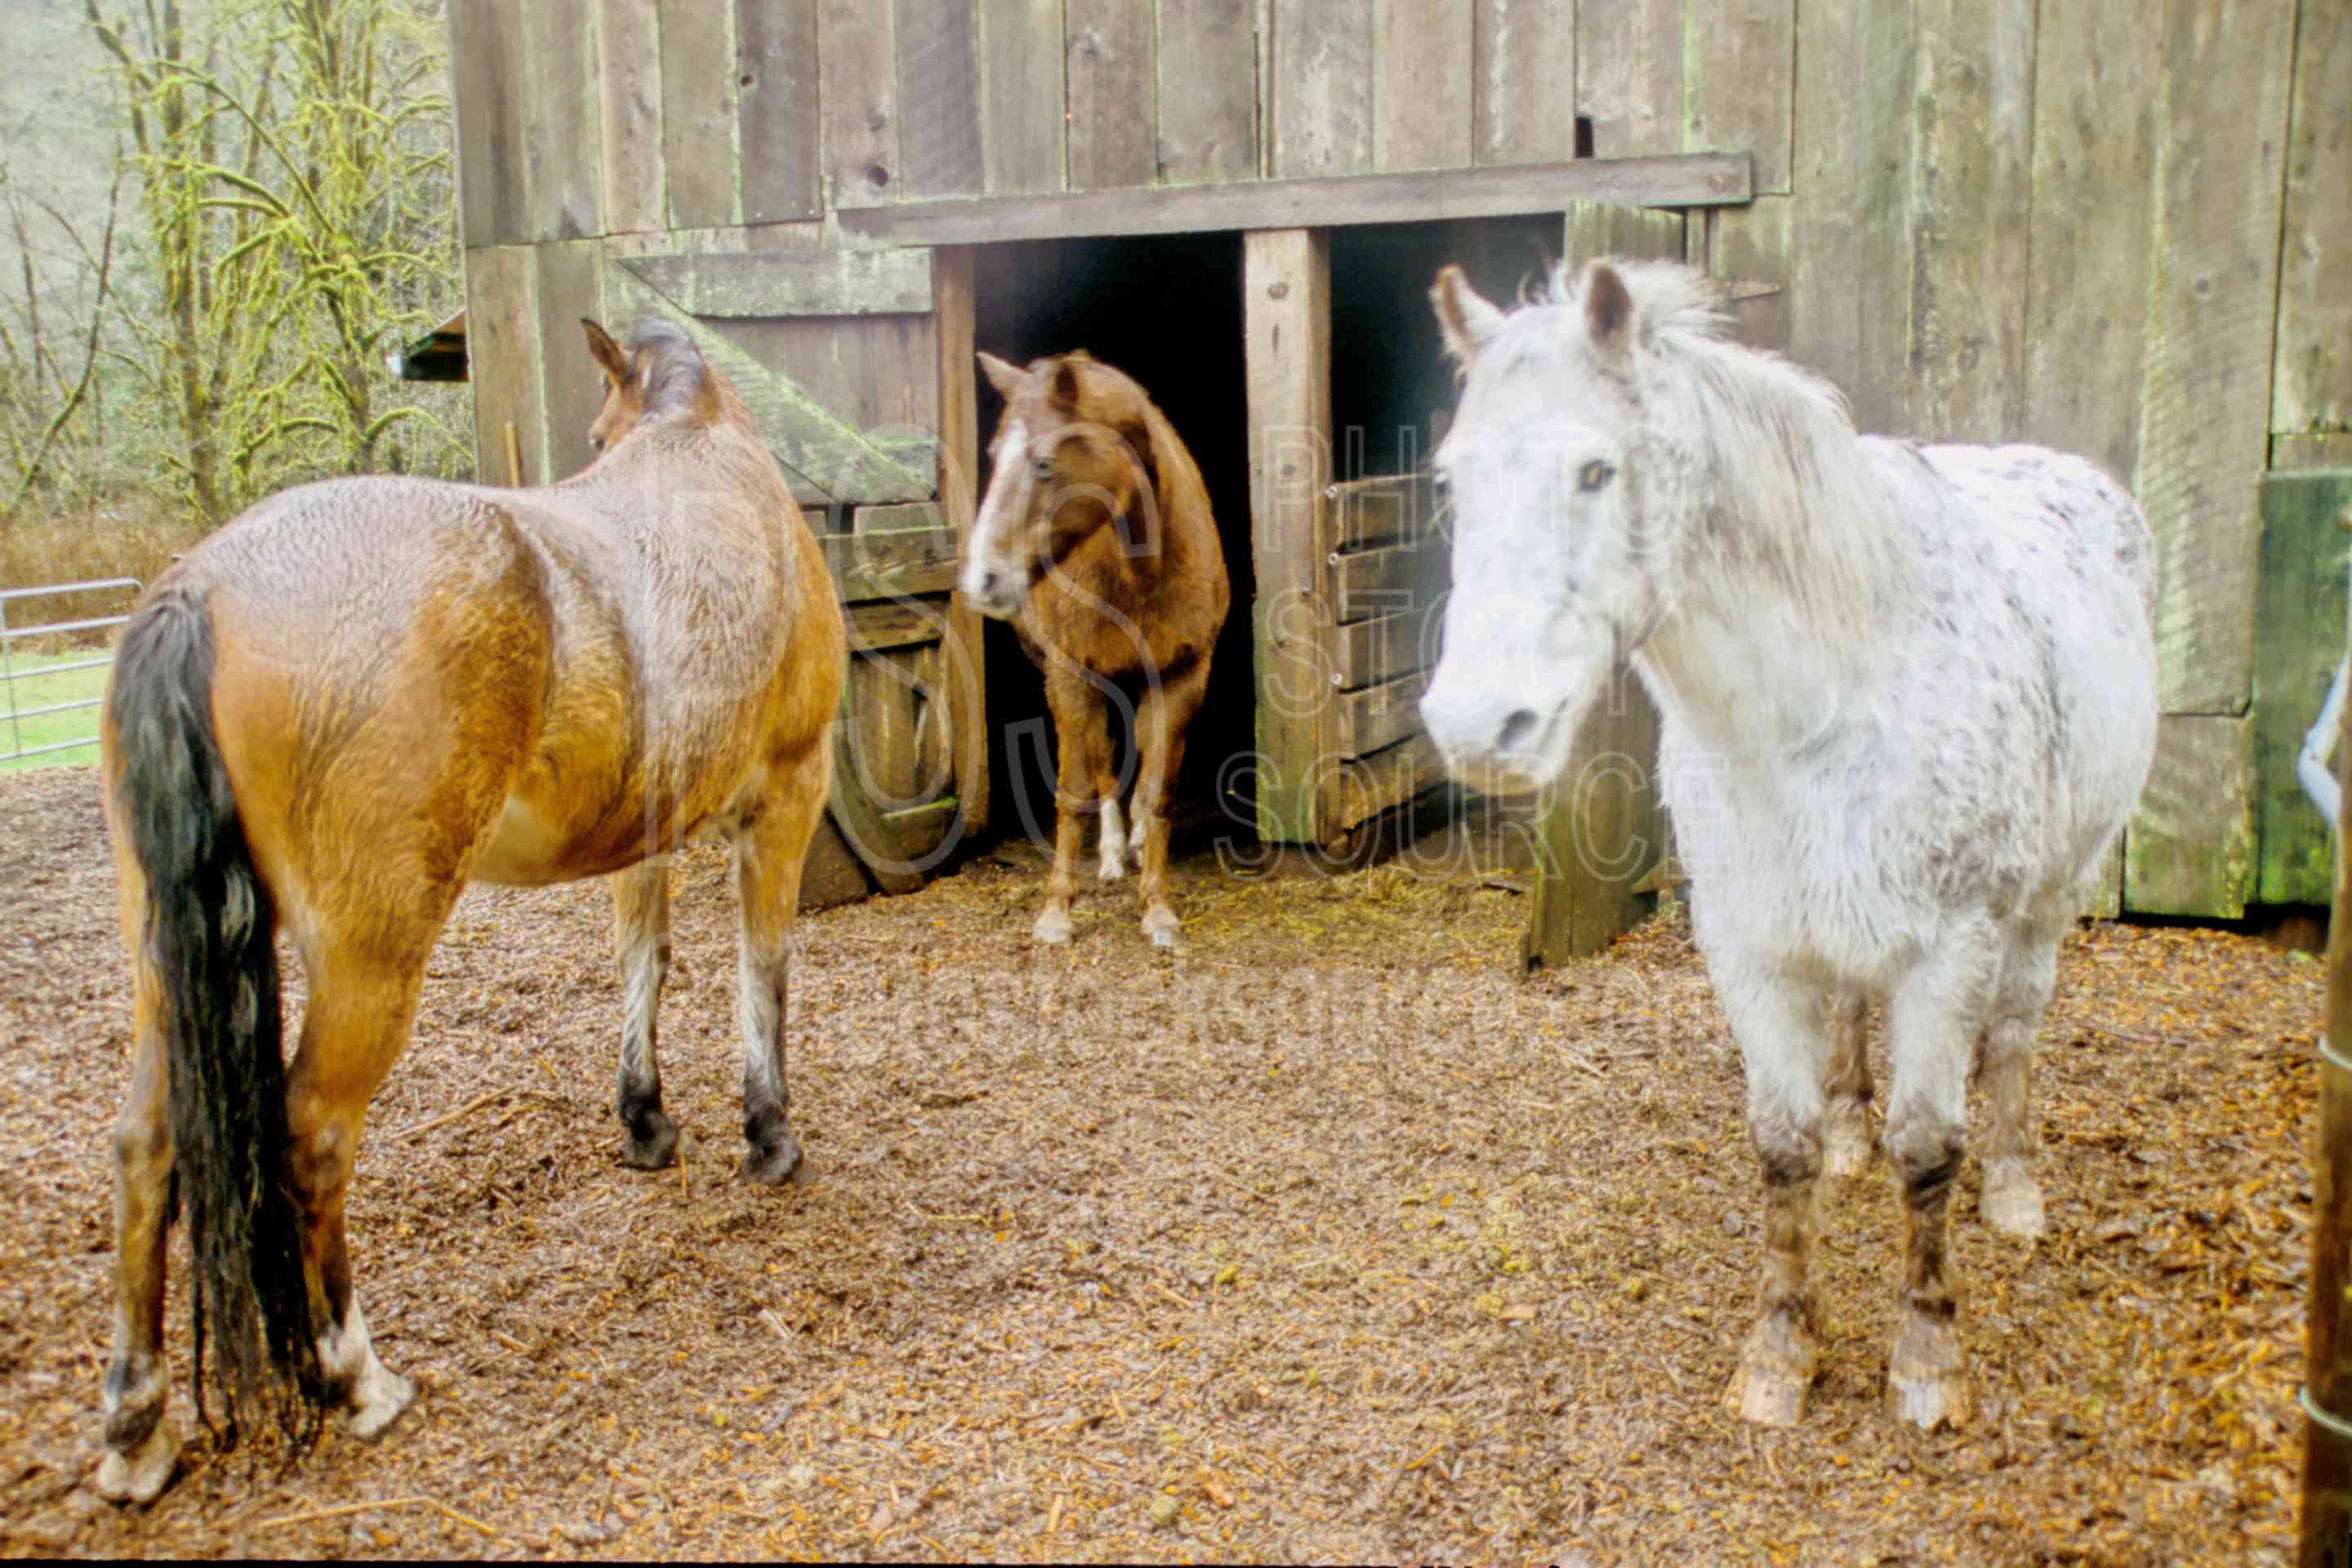 Horses at the Barn,horse,horses,barn,animals,barns,farms